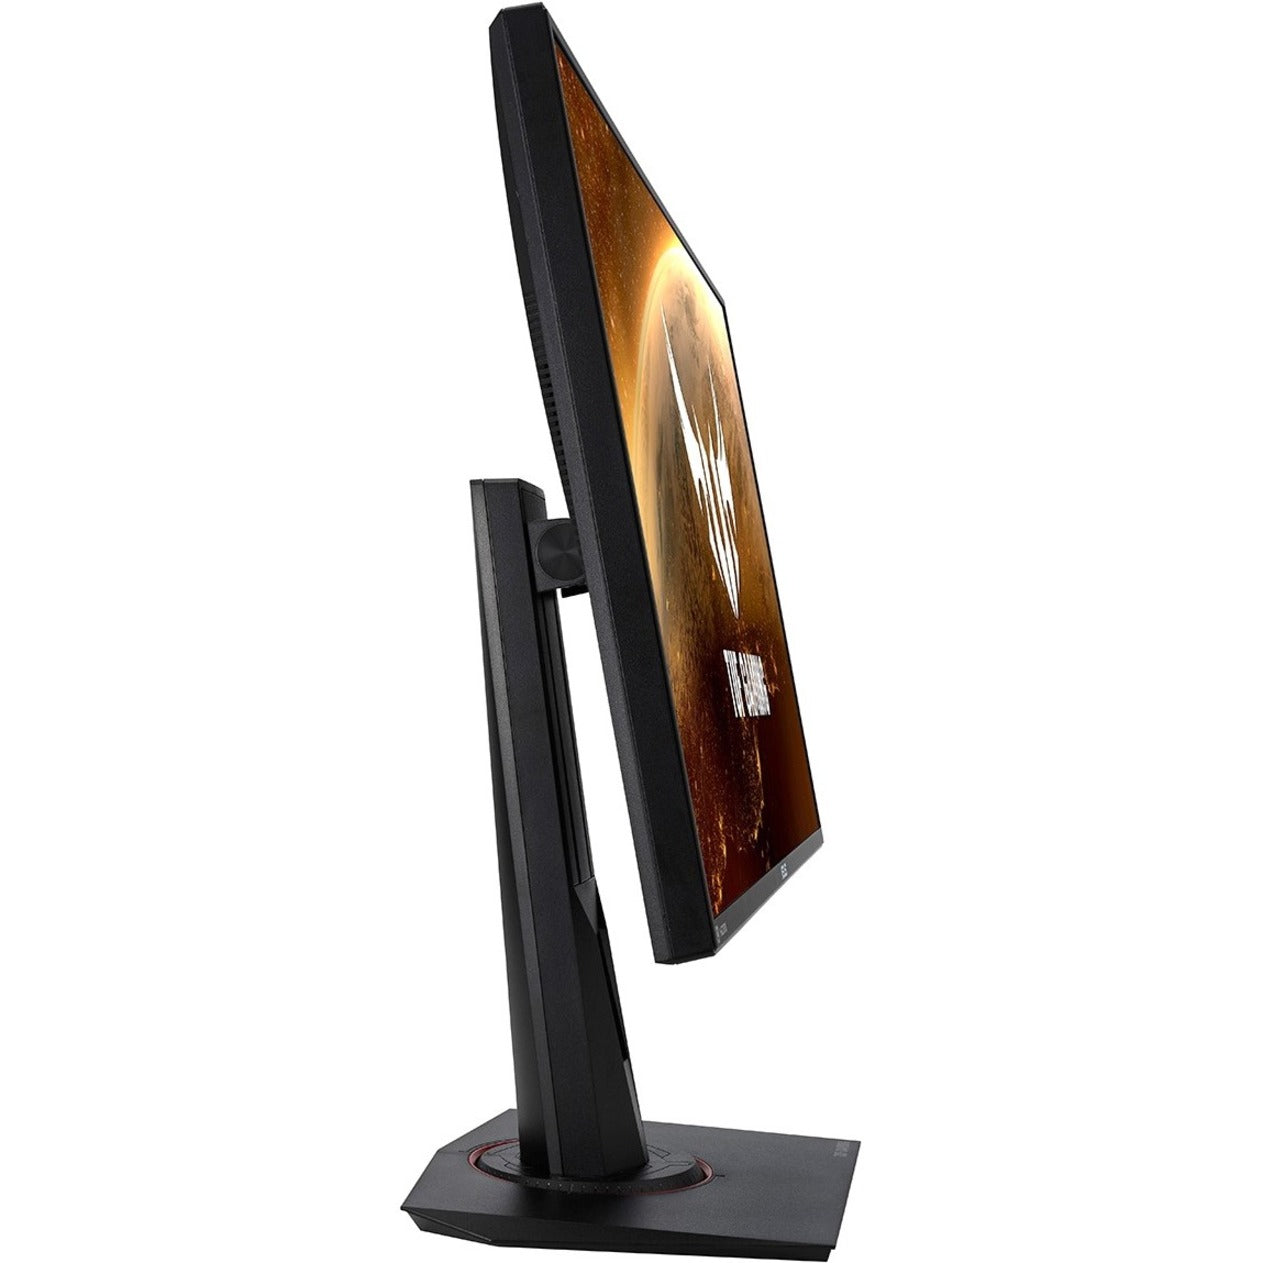 TUF Gaming VG279QM 27" Full HD Gaming LCD Monitor - Black [Discontinued]